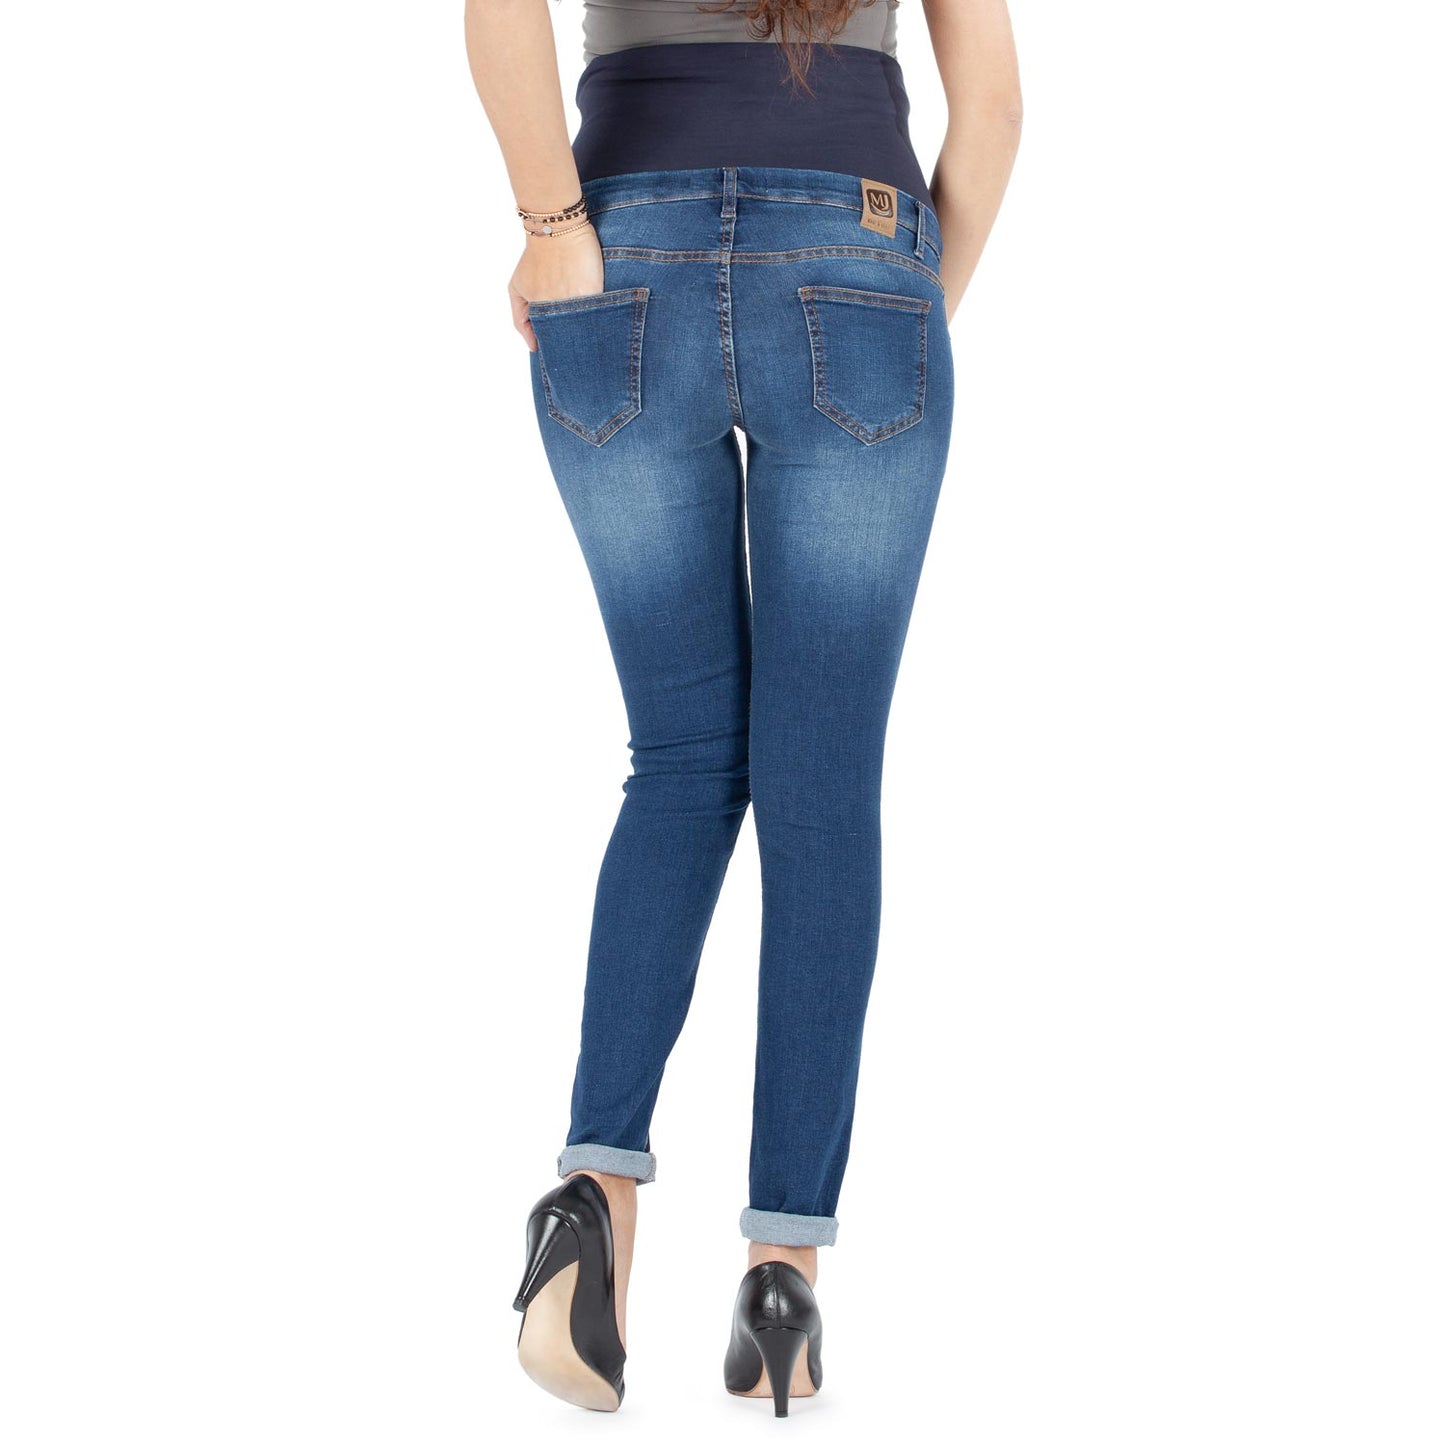 Milano - Basic maternity jeans - Slim fit